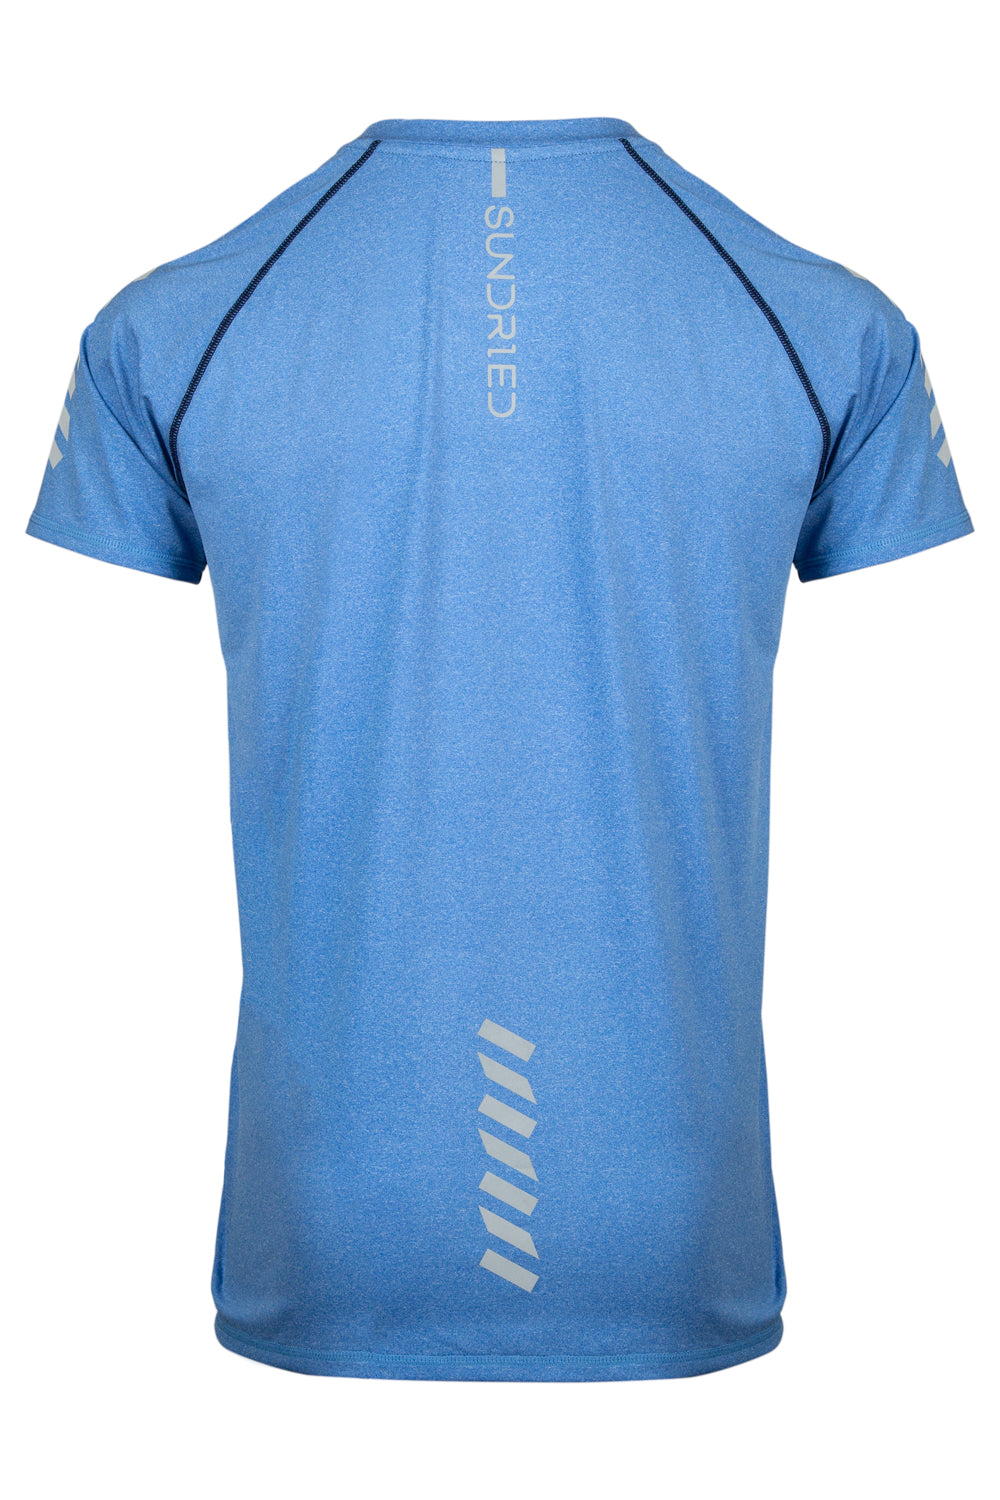 Sundried Eiger Men's T-Shirt